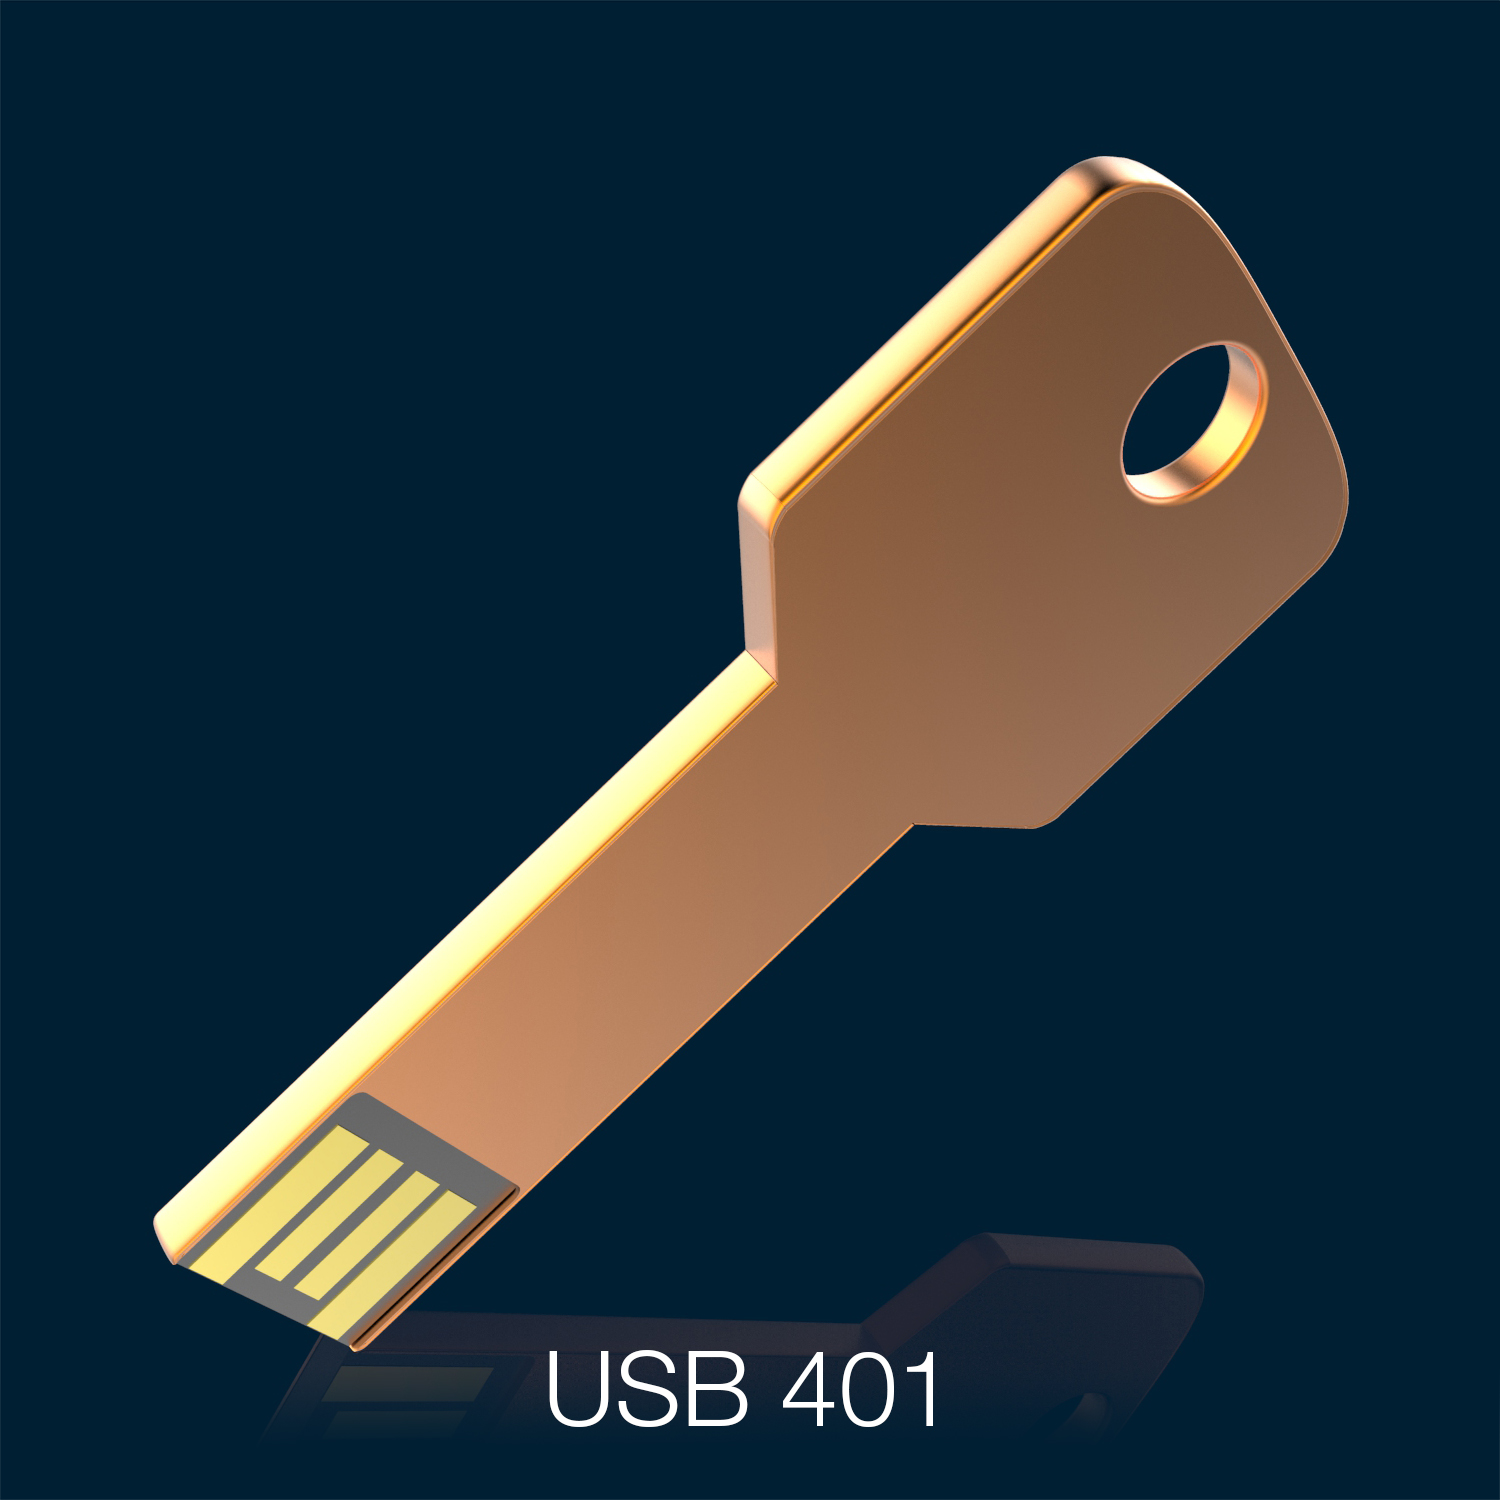 USB 401